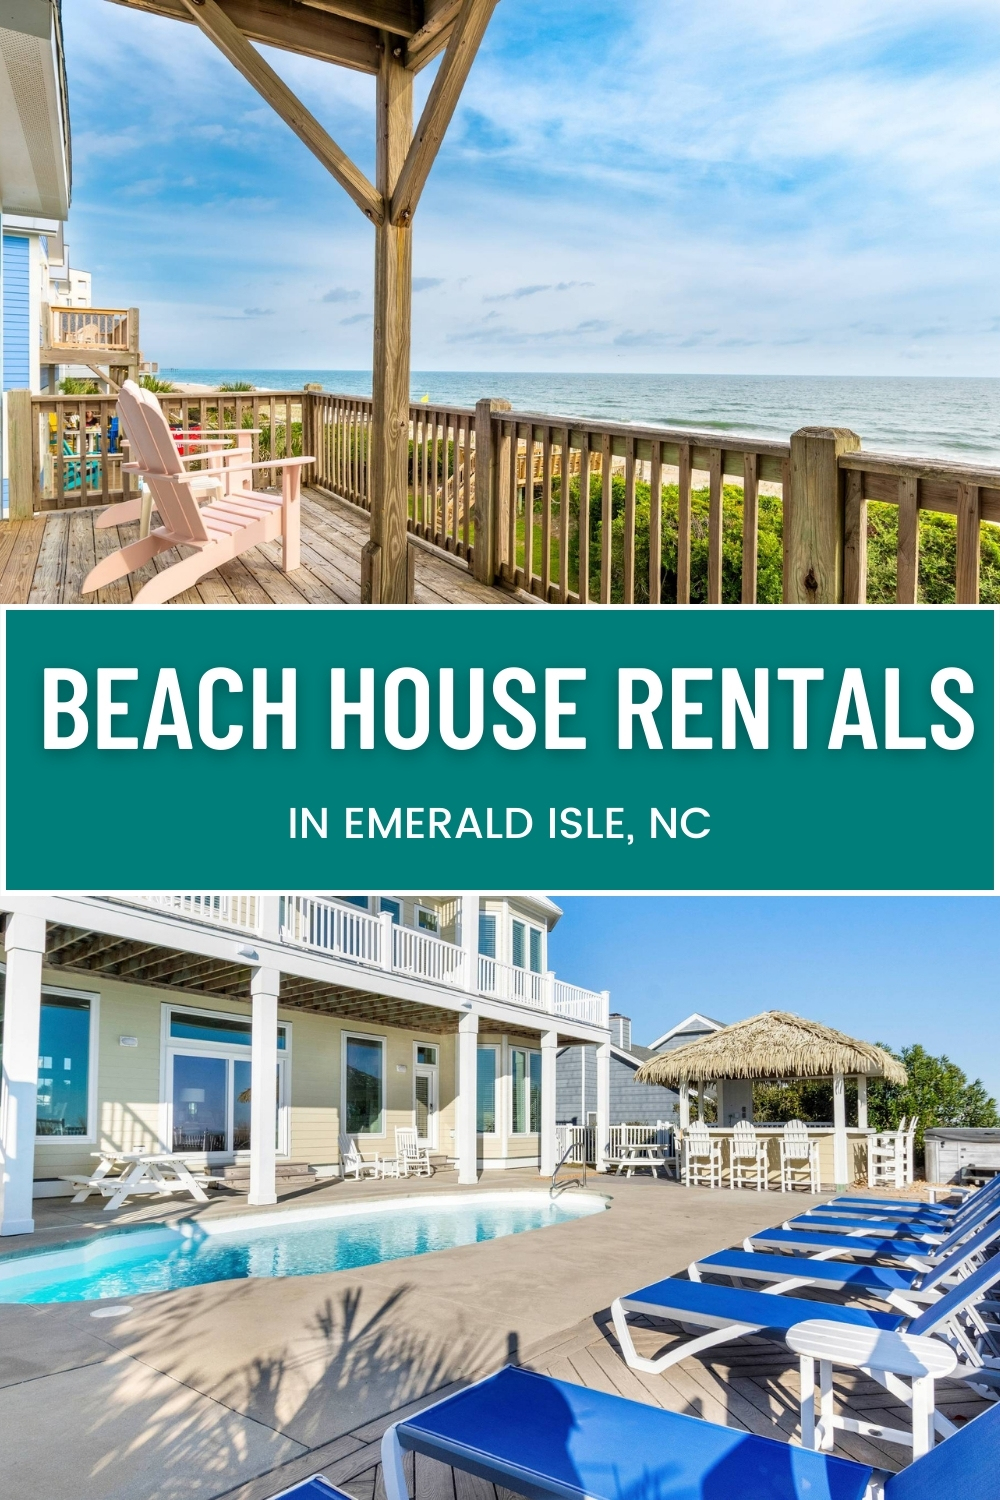 Beach House Rentals in Emerald Isle